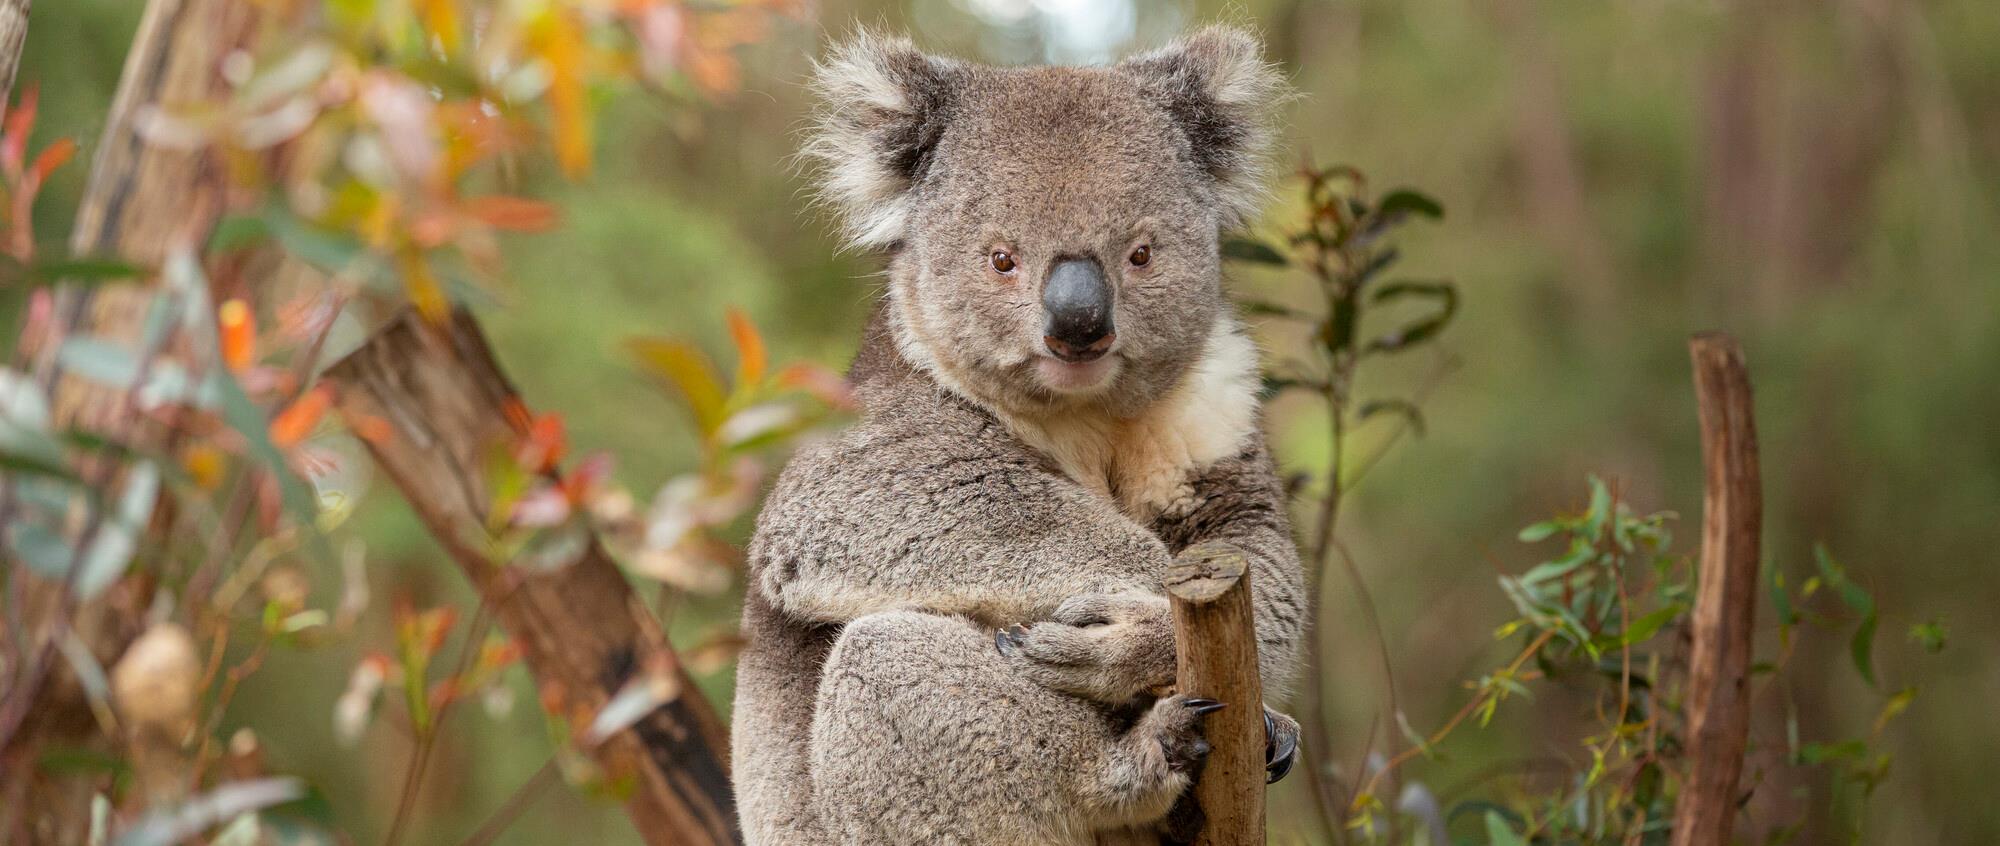 Southern Koala sitting on branch, looking at camera